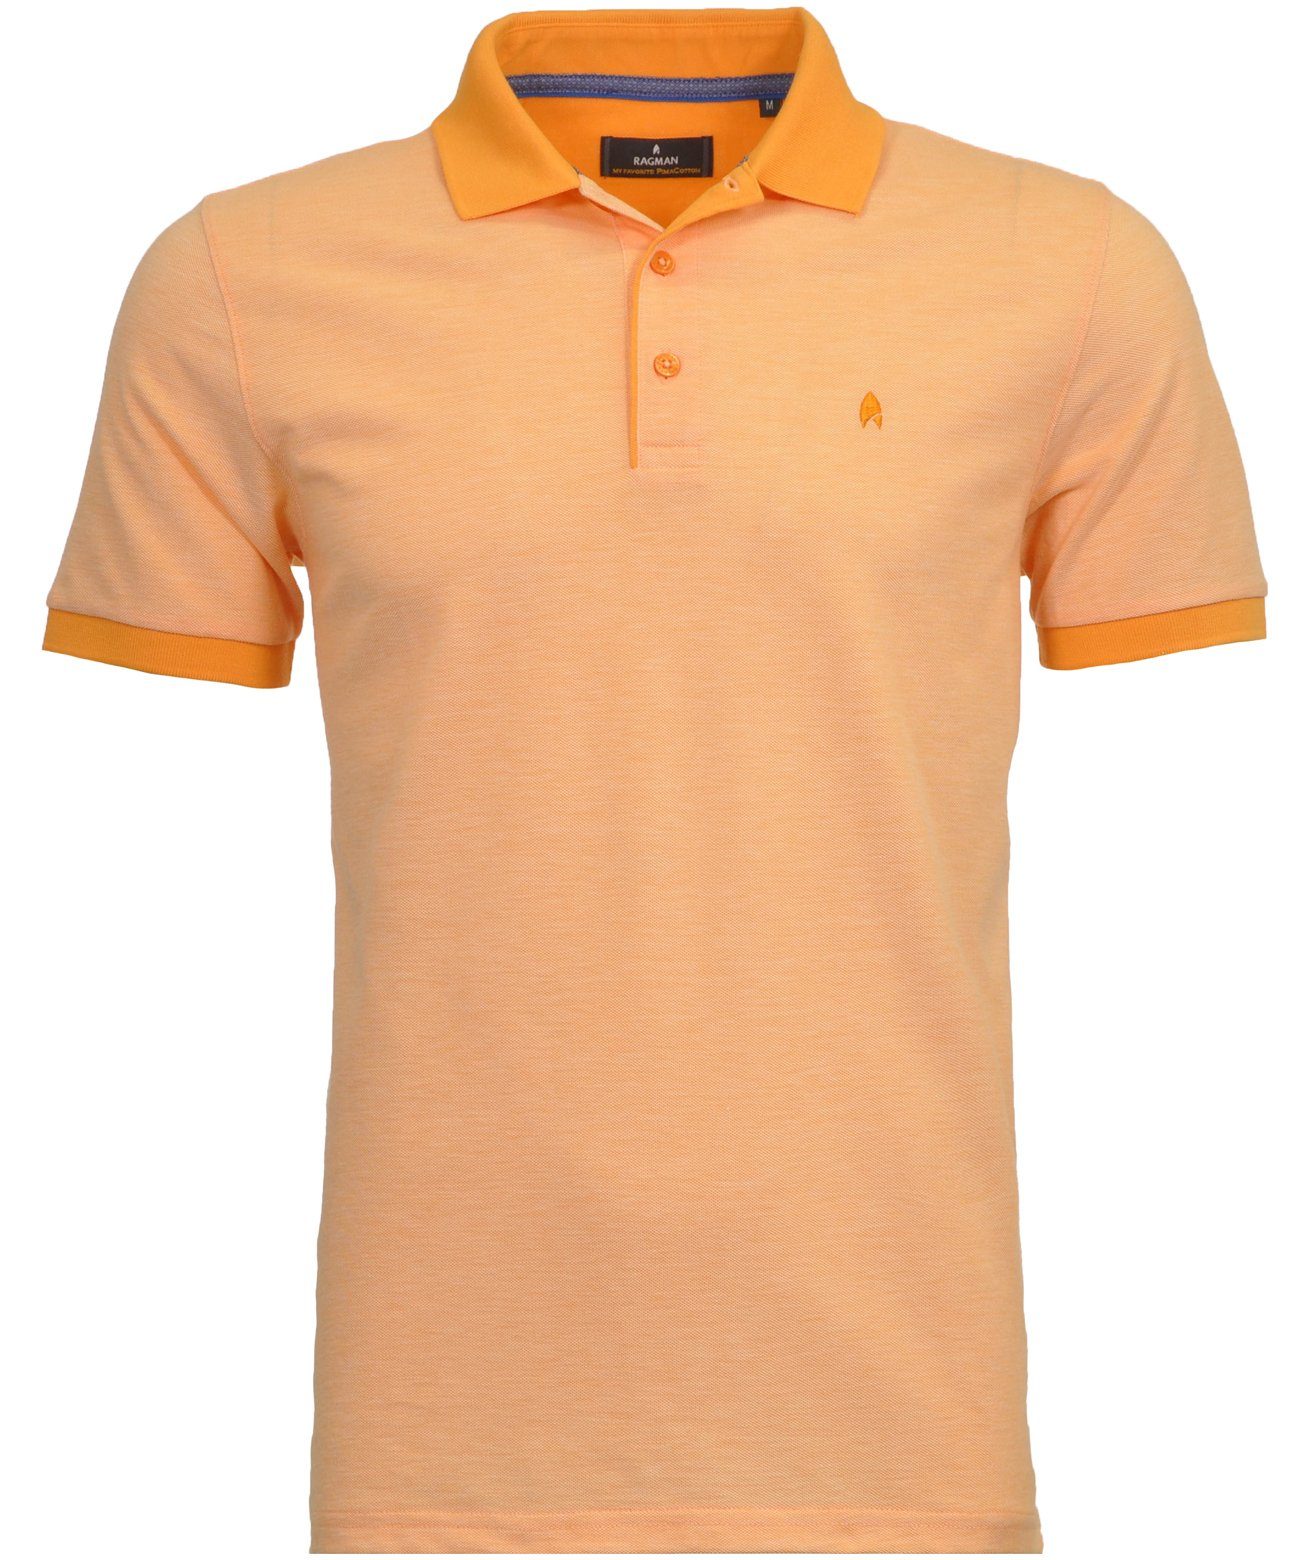 Versandhandel im Ausland RAGMAN Poloshirt Orange-554